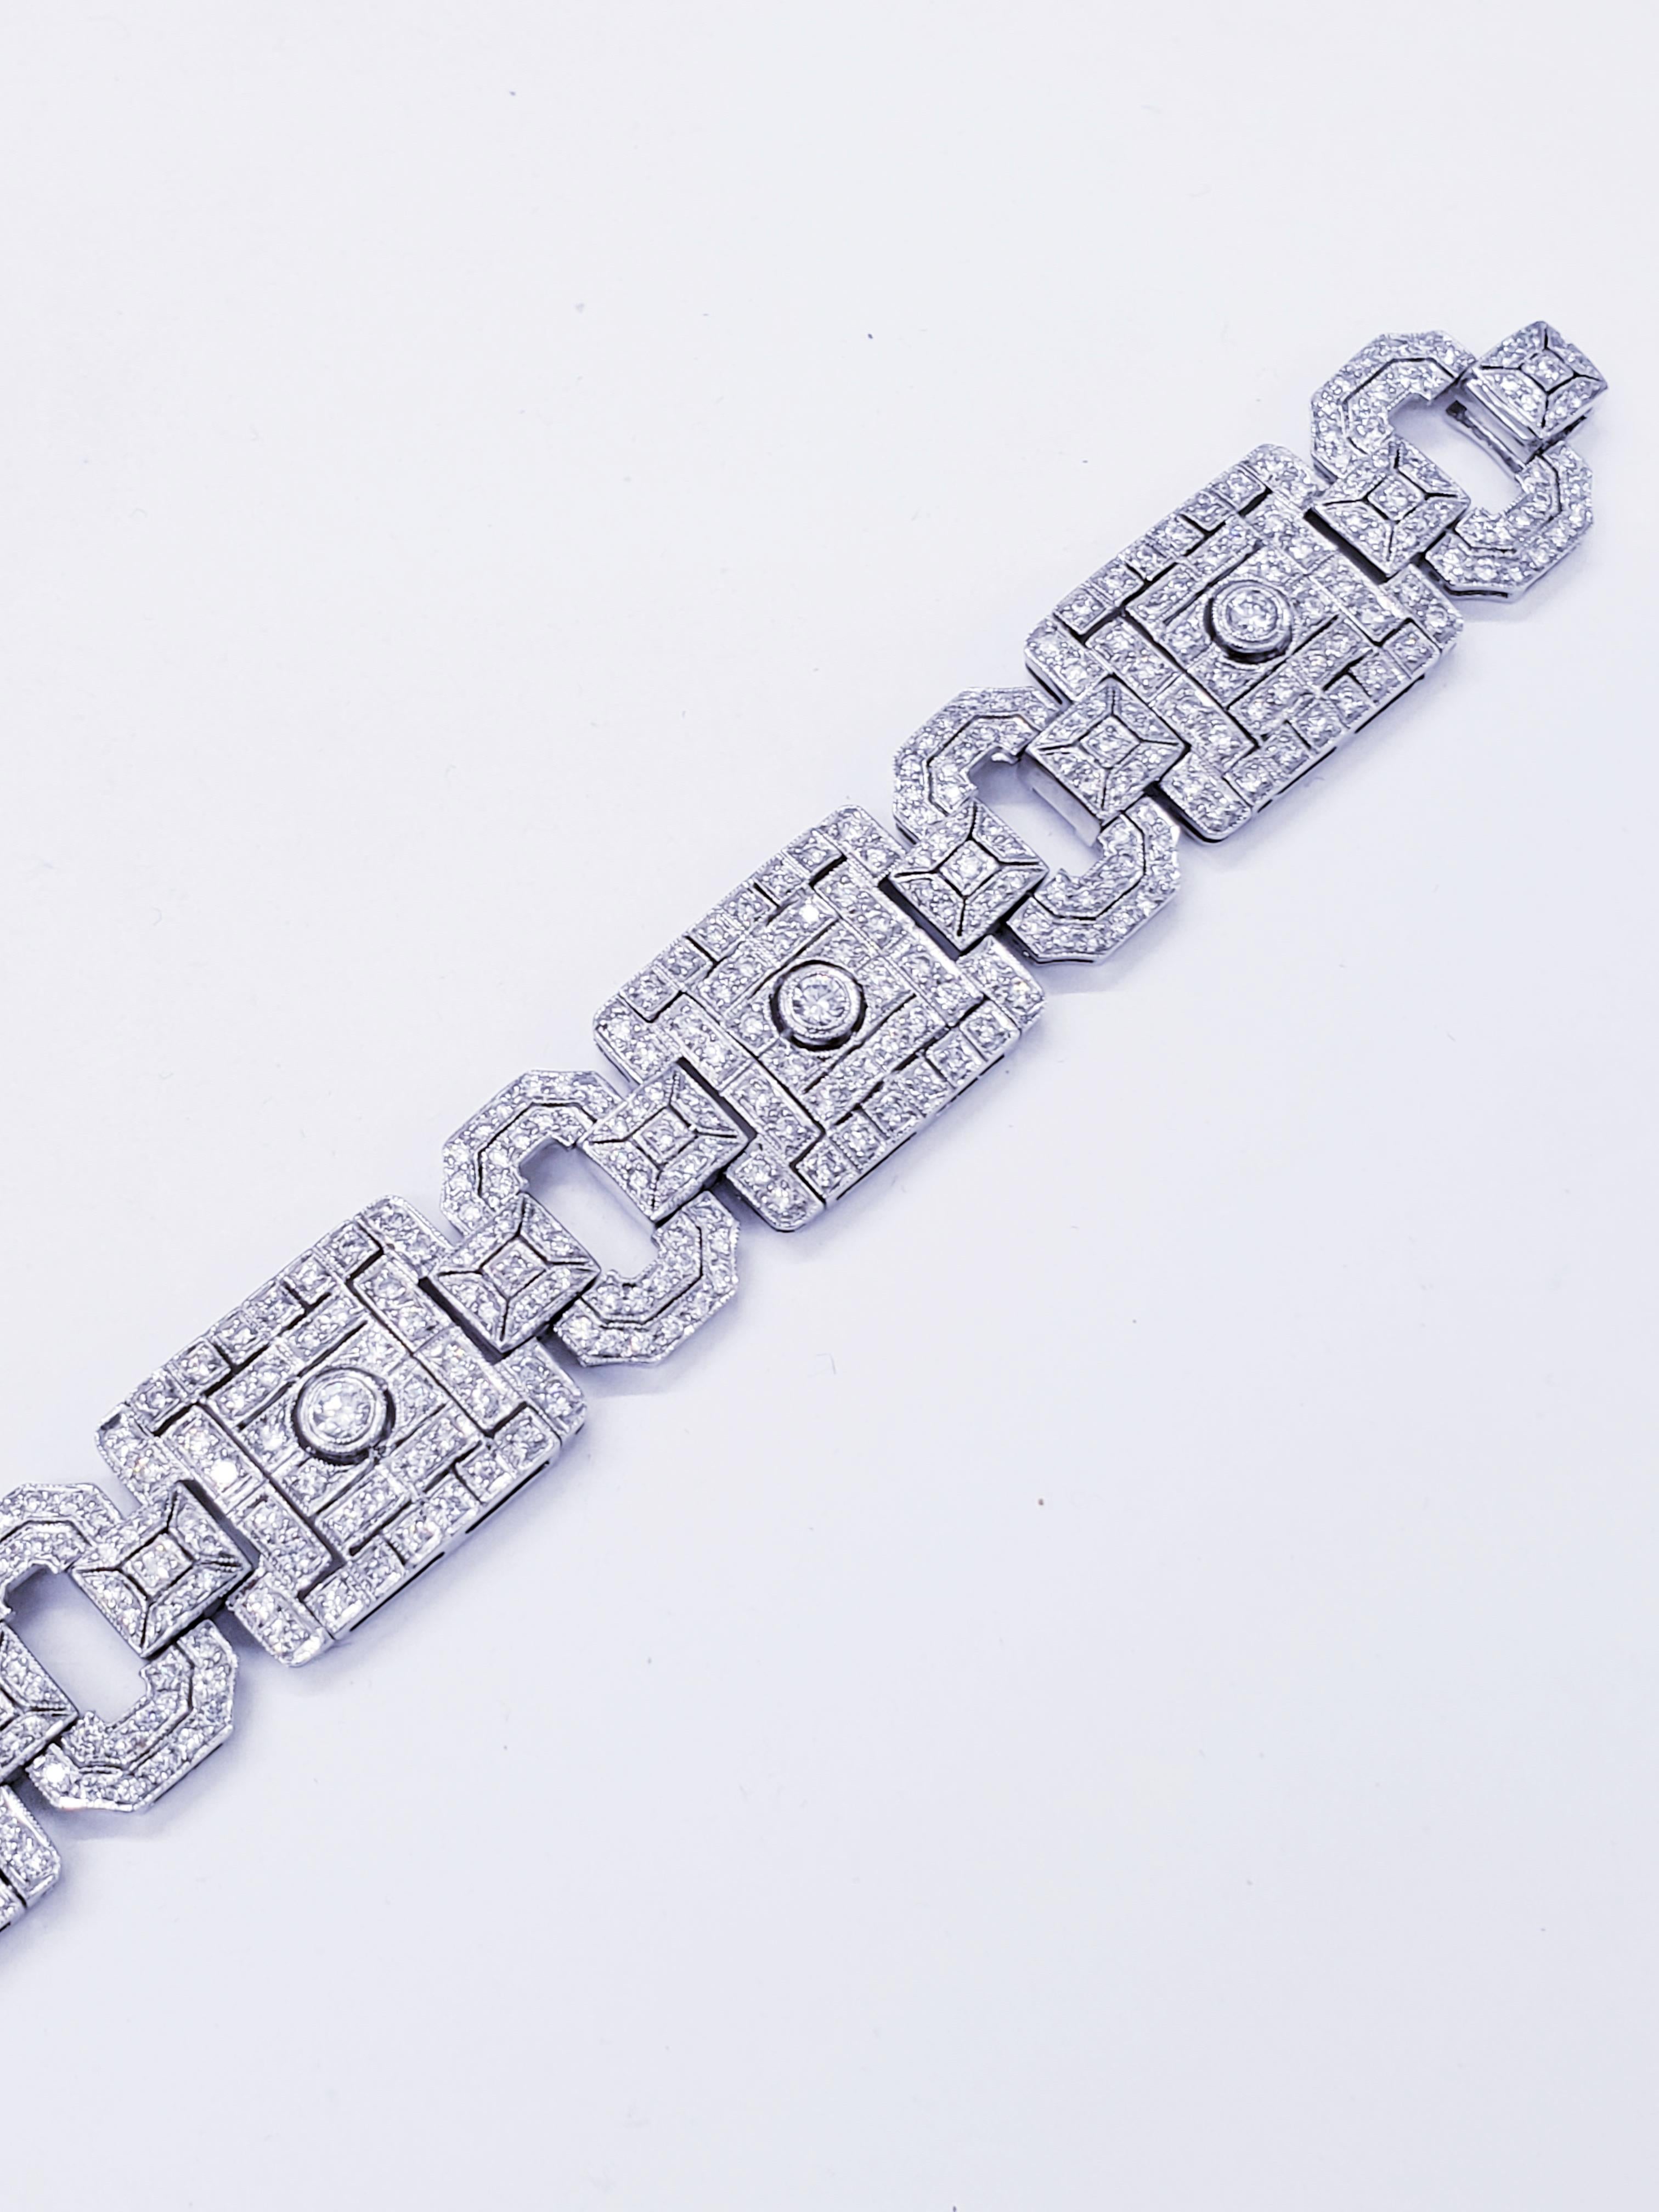 Women's Art Deco Luxurious 10 Carat Diamond Bracelet 18 Karat White Gold For Sale